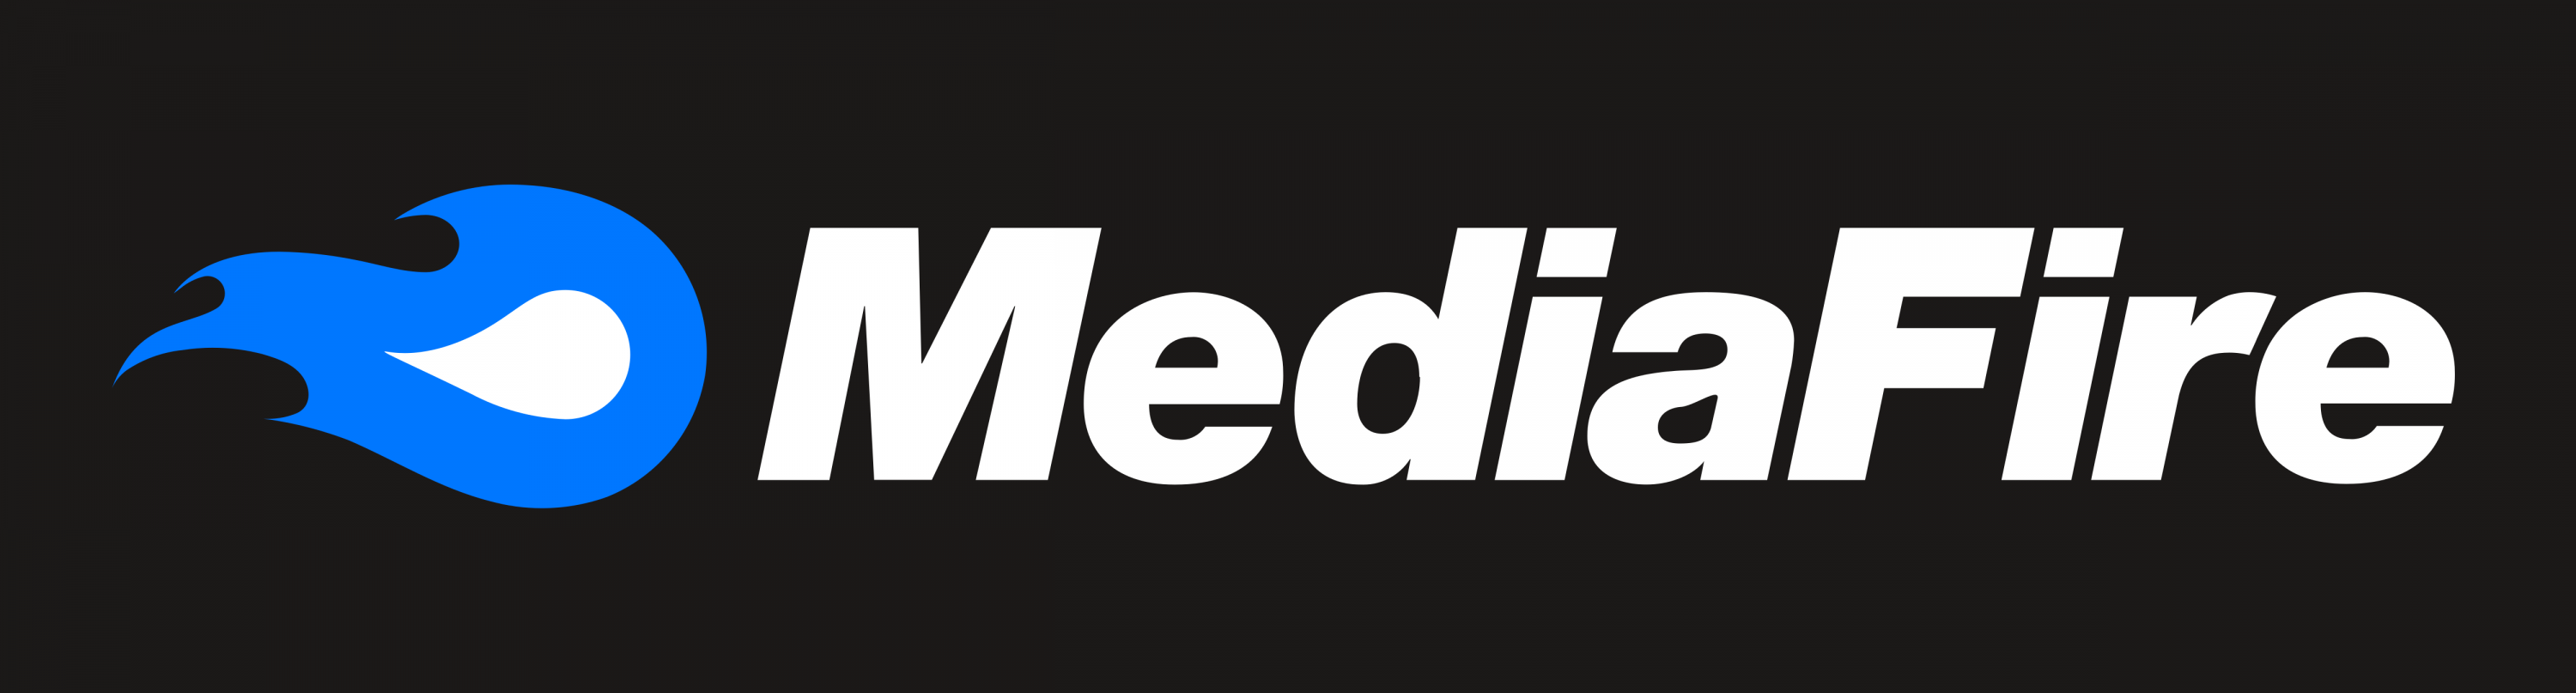 Mediafire_Logo.png